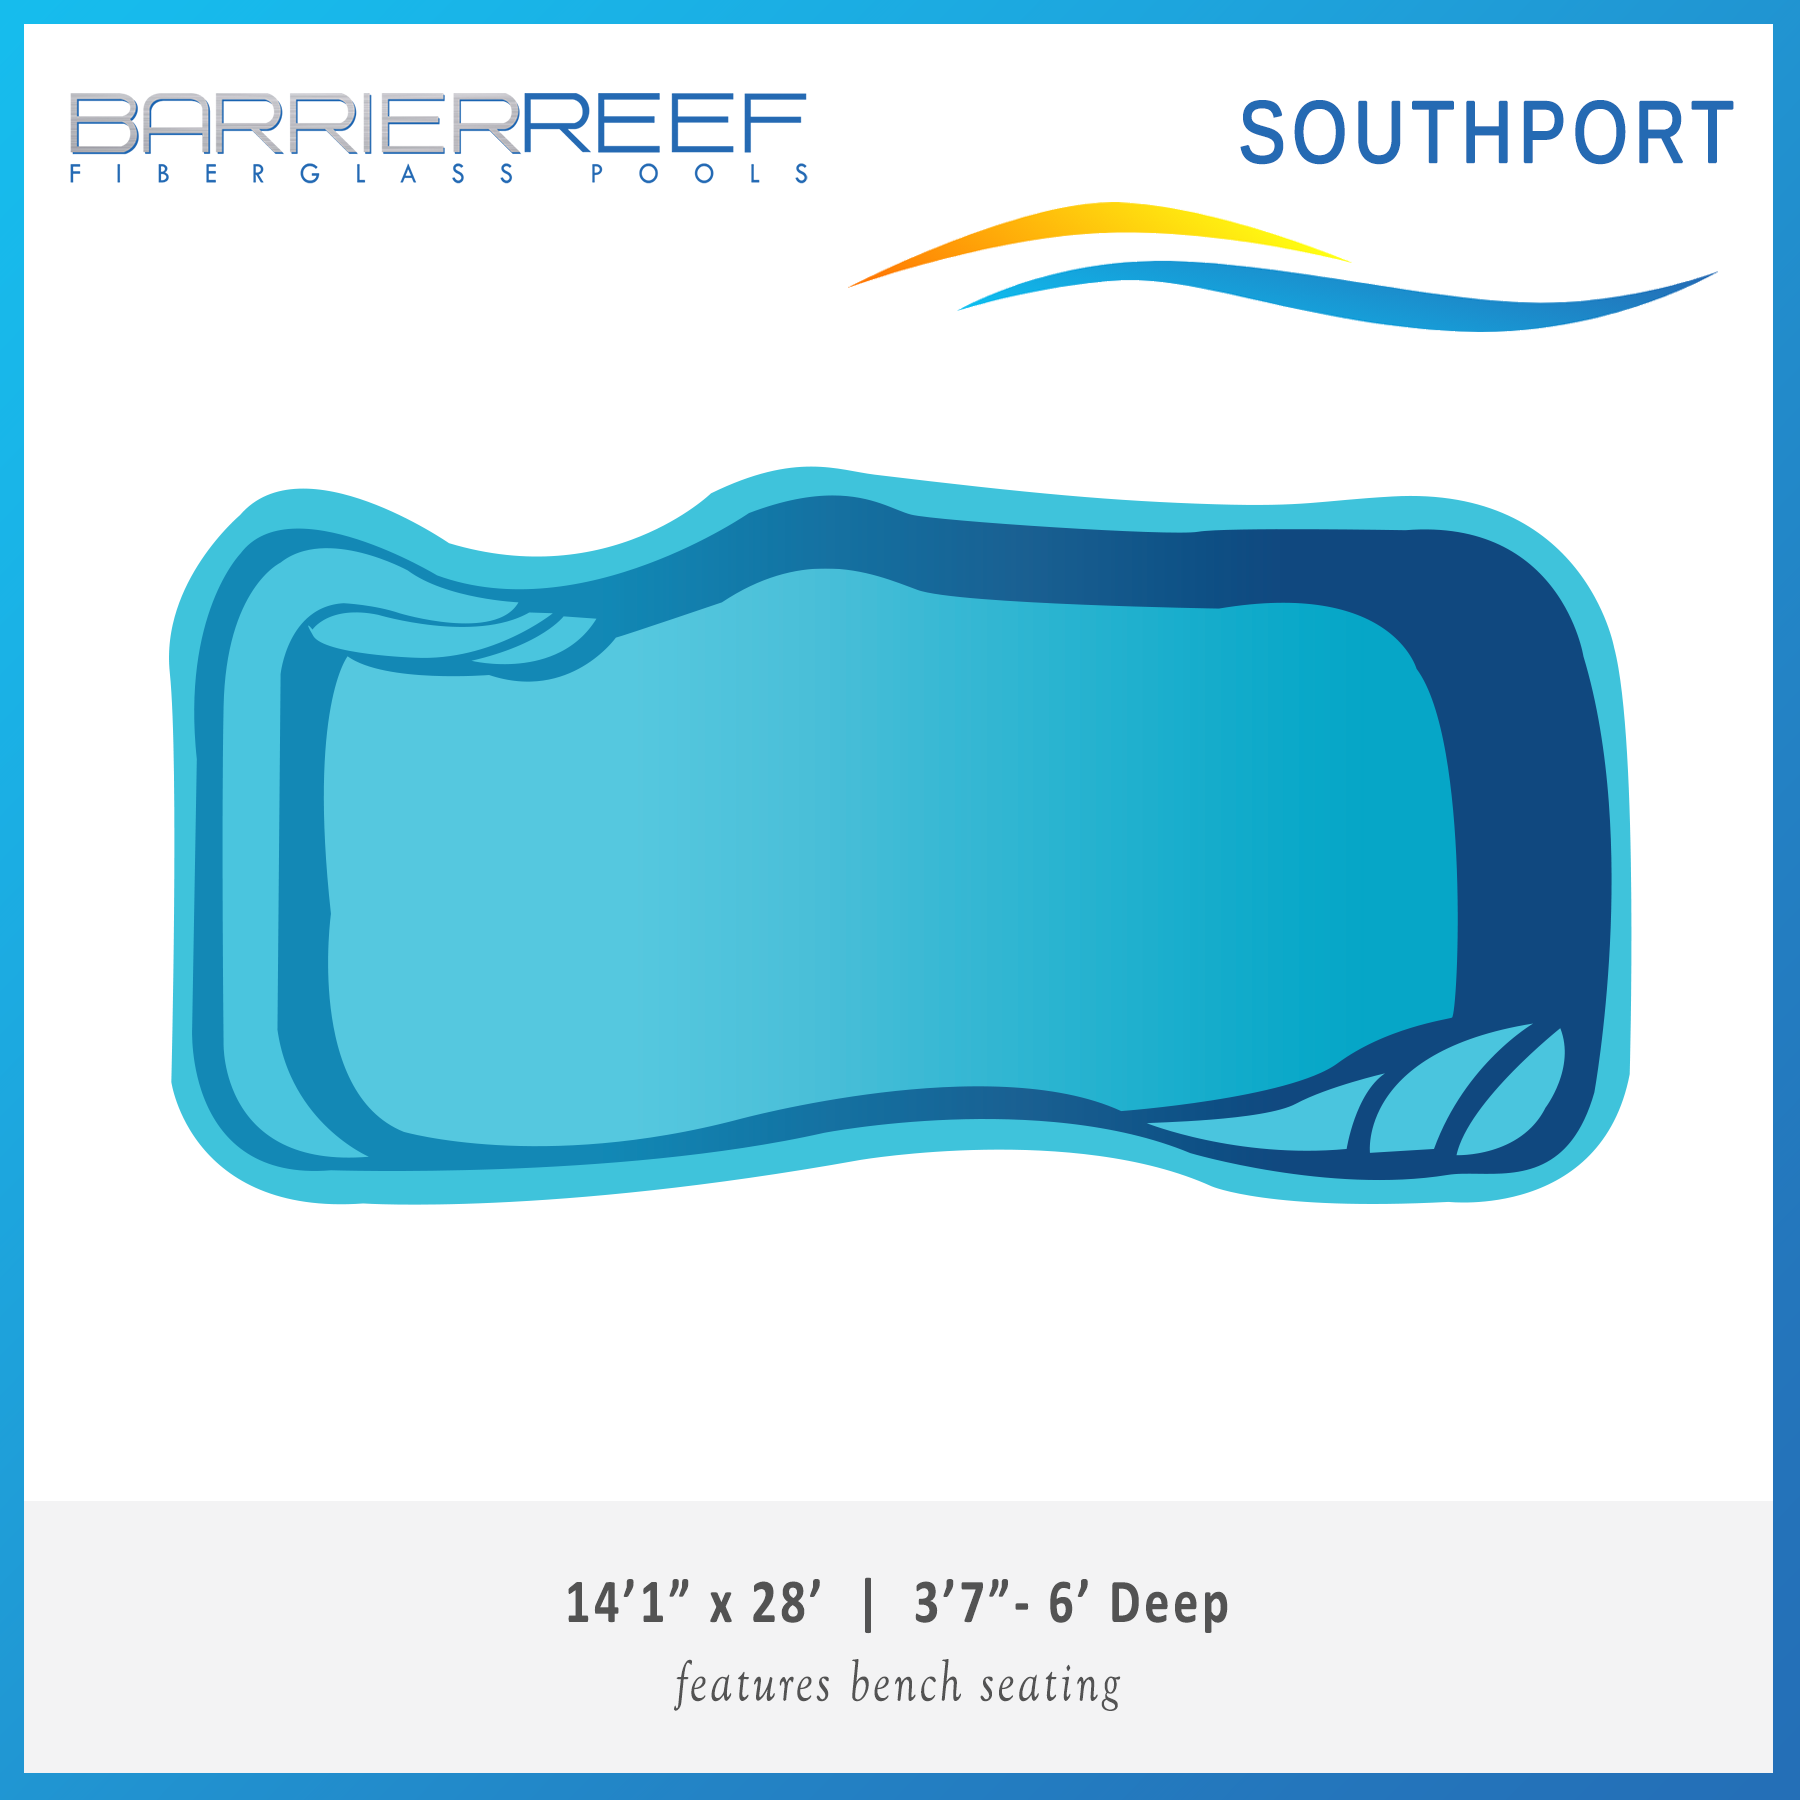 Southport Barrier Reef Fiberglass Pool